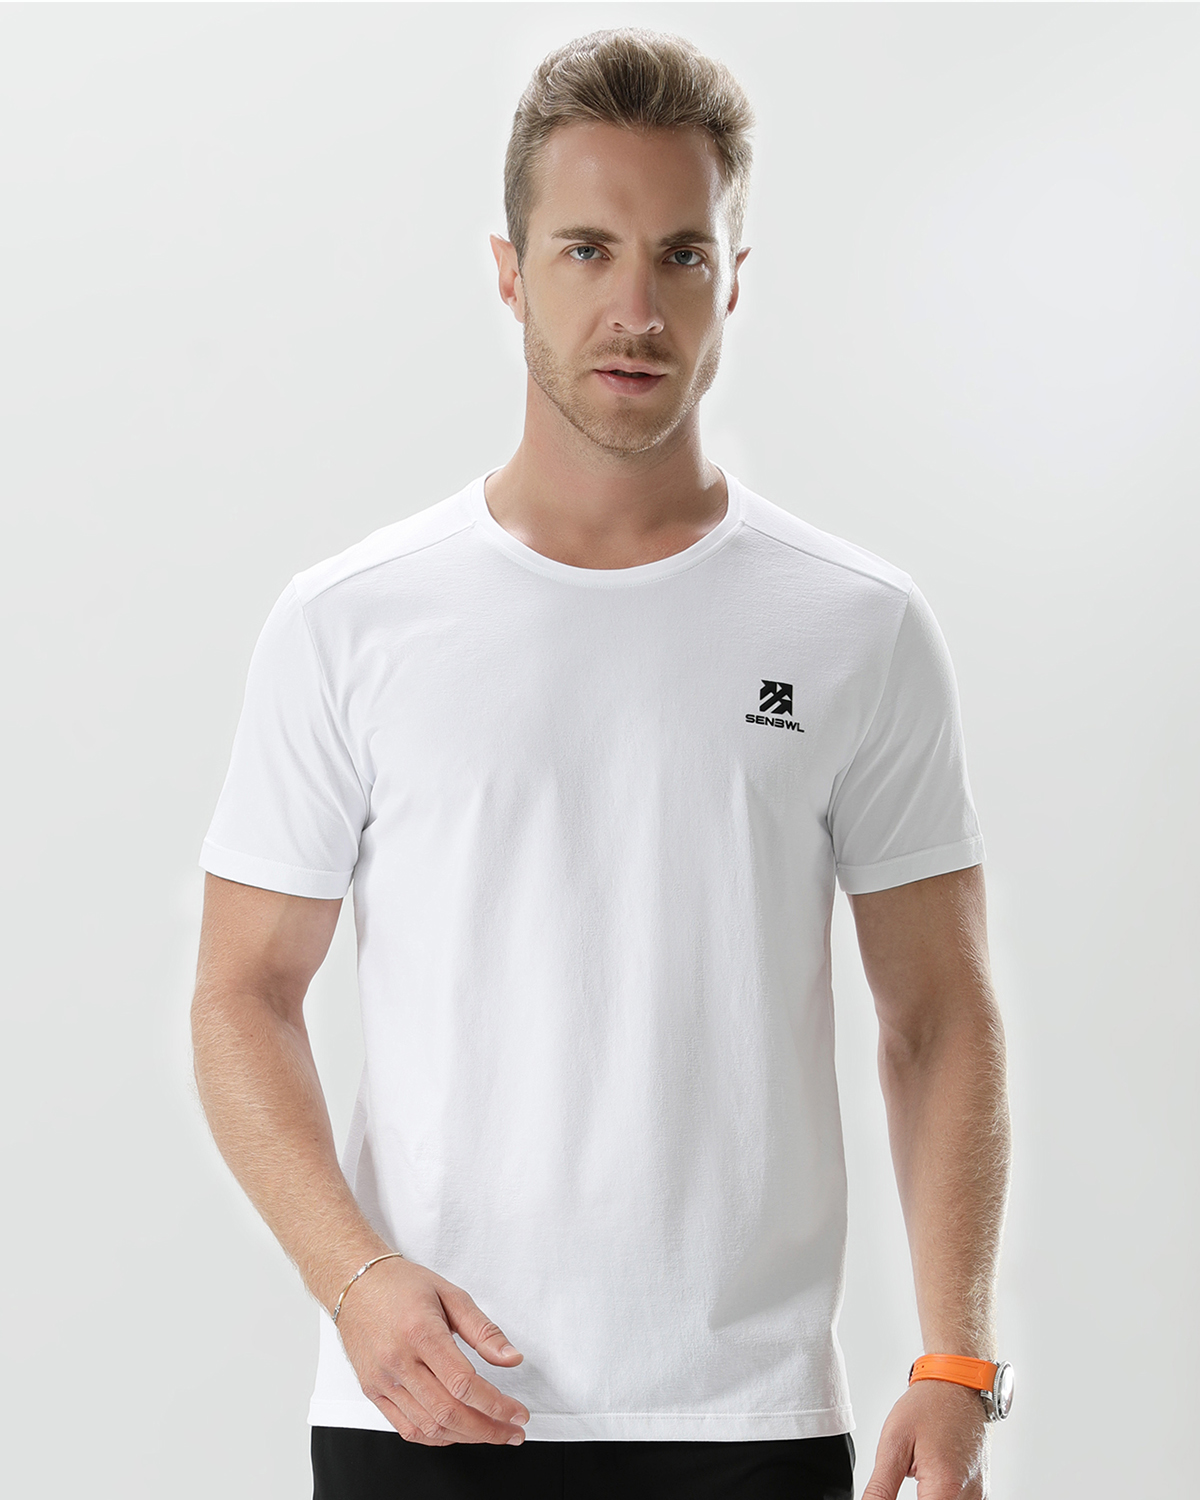 Senbwl Men's Short Sleeve Sports Quick Dry Technical T-Shirt-Senbwl Sports